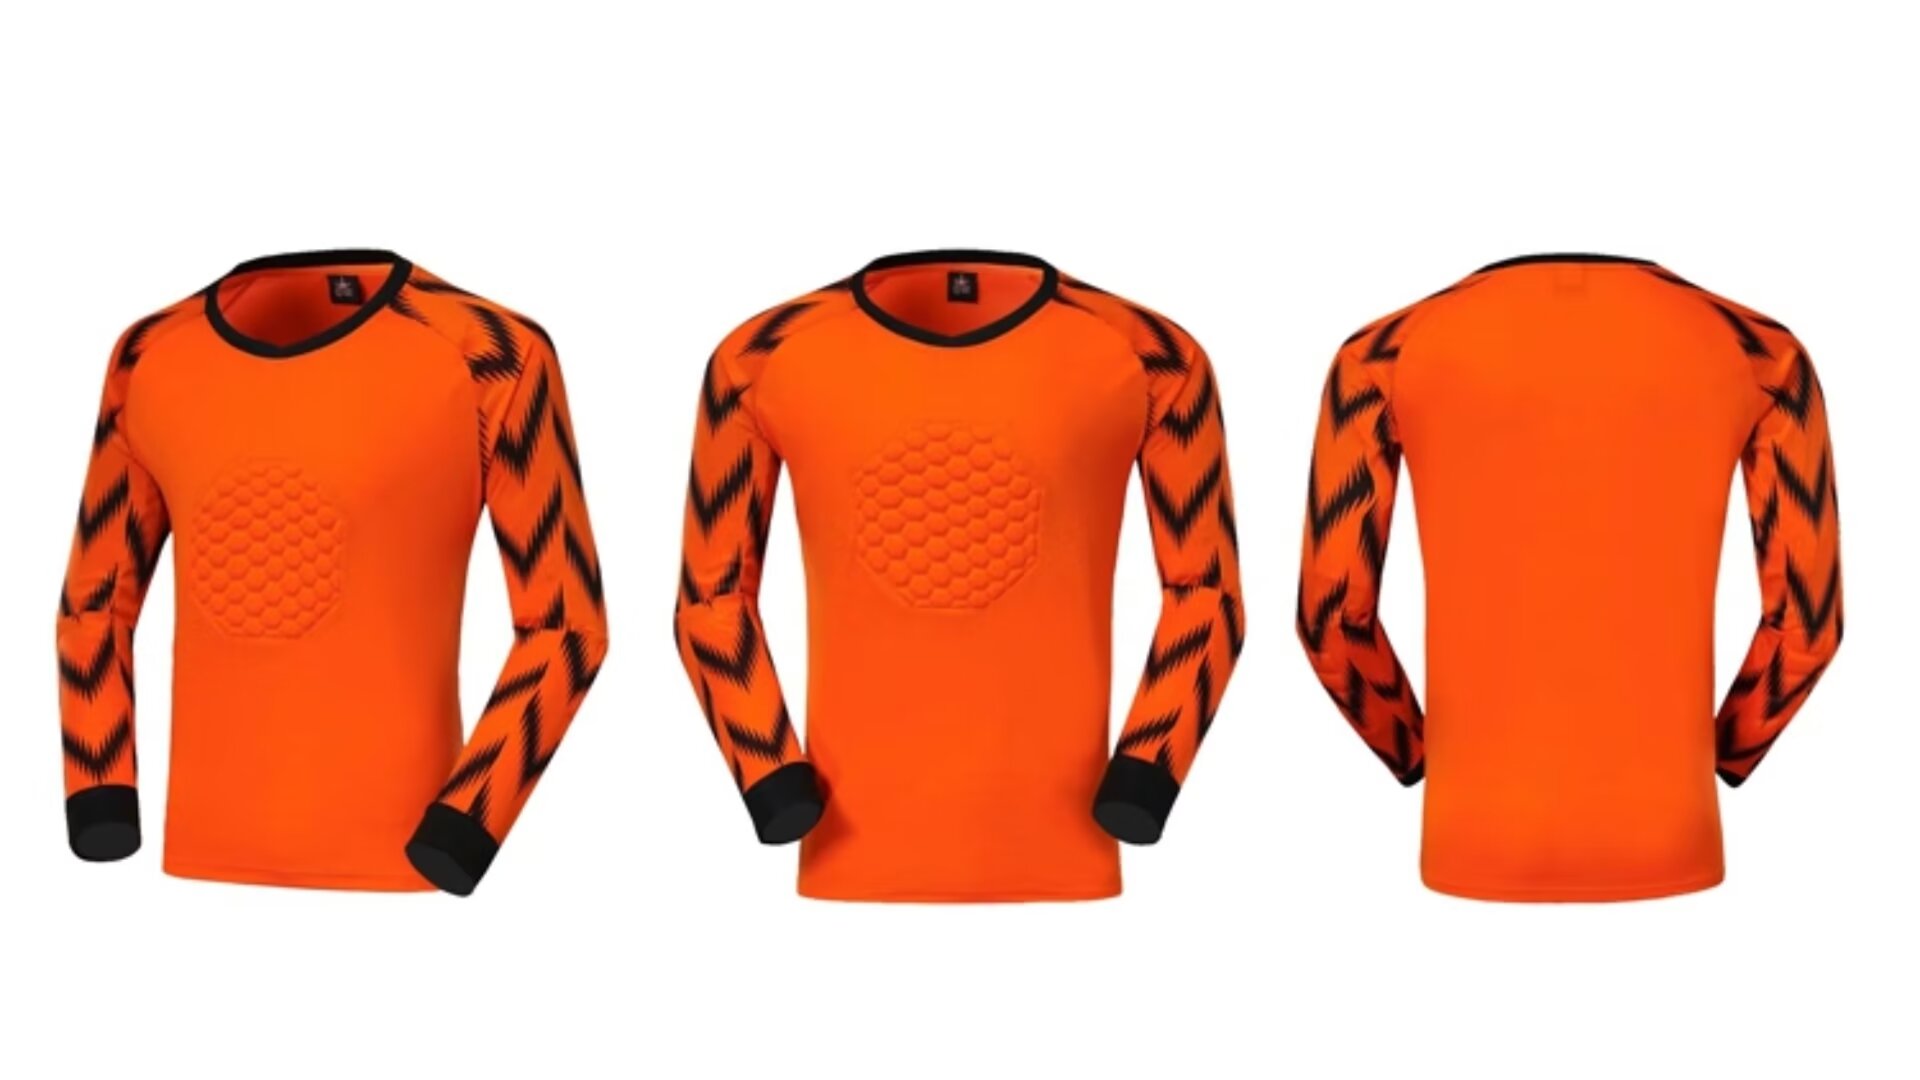 Goalkeeper Jersey 019 - Orange